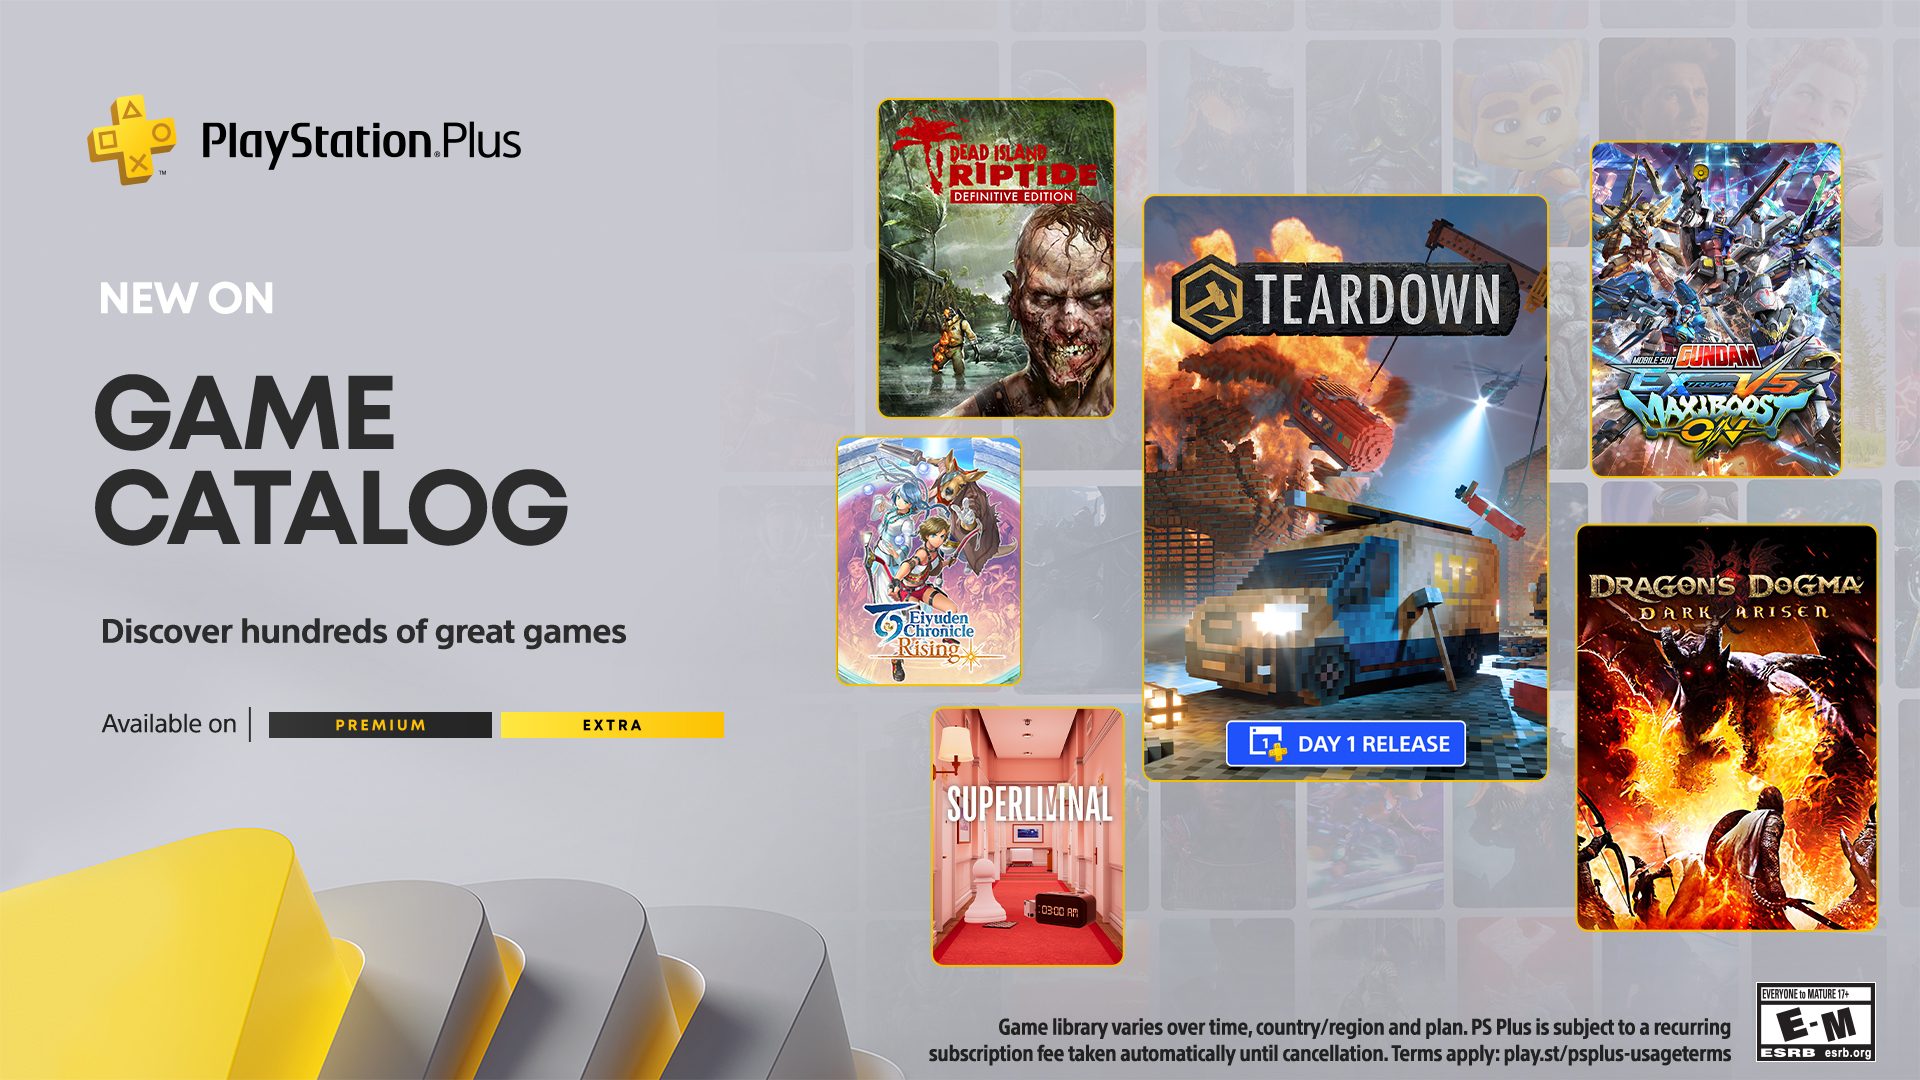 PlayStation Plus Game Catalog for November: Teardown, Dragon's